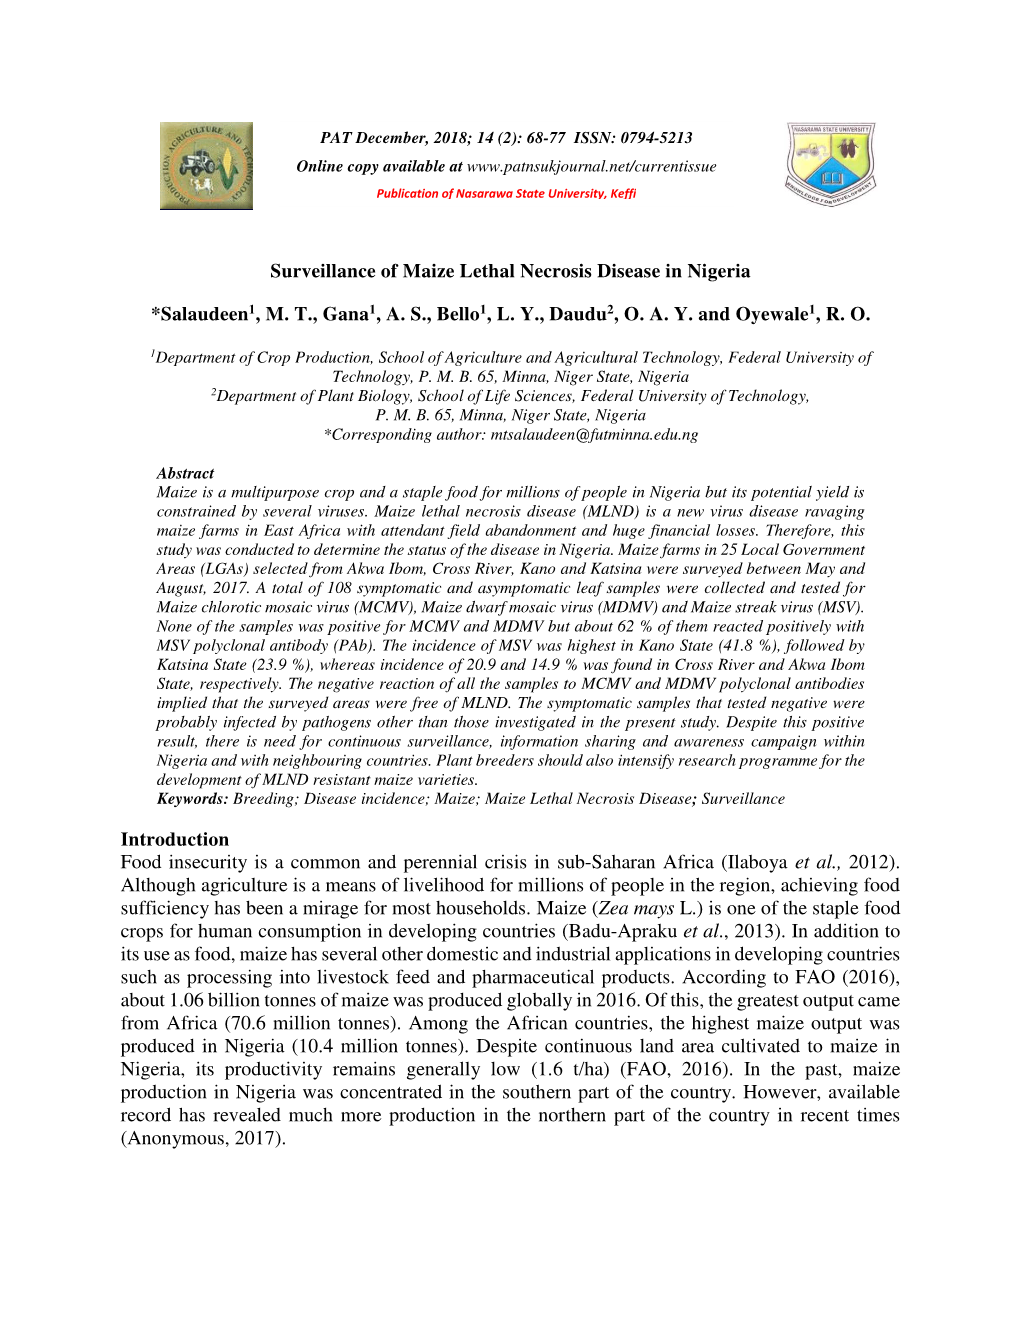 Surveillance of Maize Lethal Necrosis Disease in Nigeria *Salaudeen1, M. T., Gana1, A. S., Bello1, L. Y., Daudu2, O. A. Y. and O